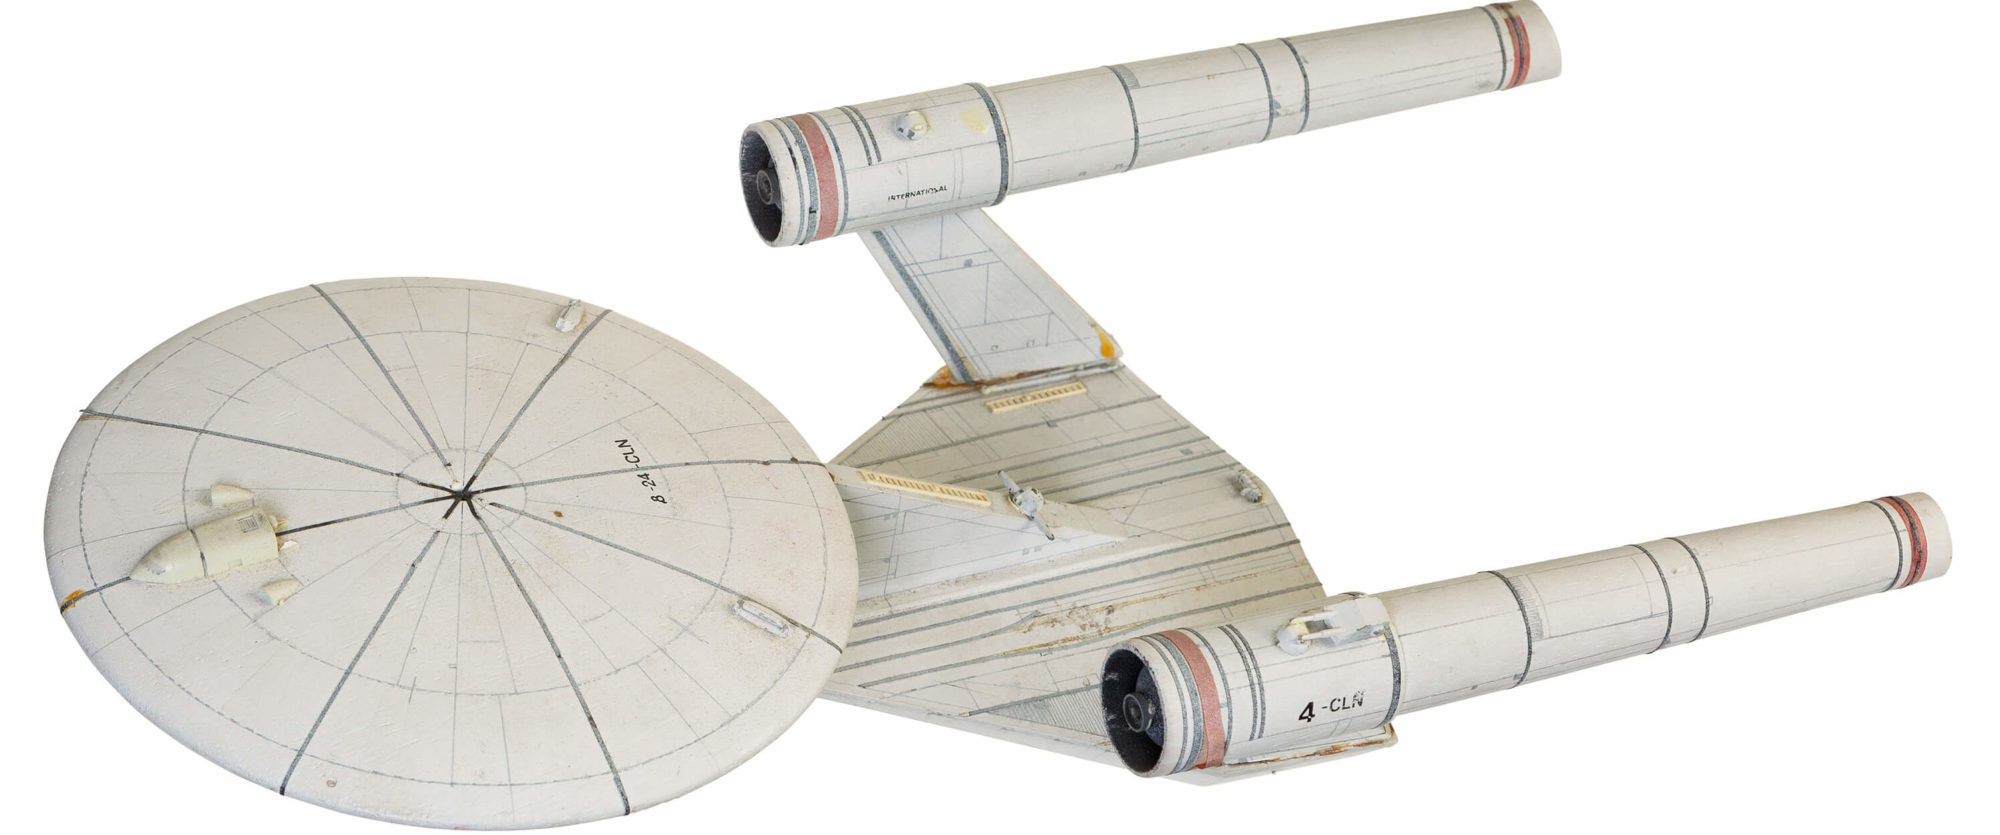 Star Trek Ralph McQuarrie U.S.S. Enterprise study model